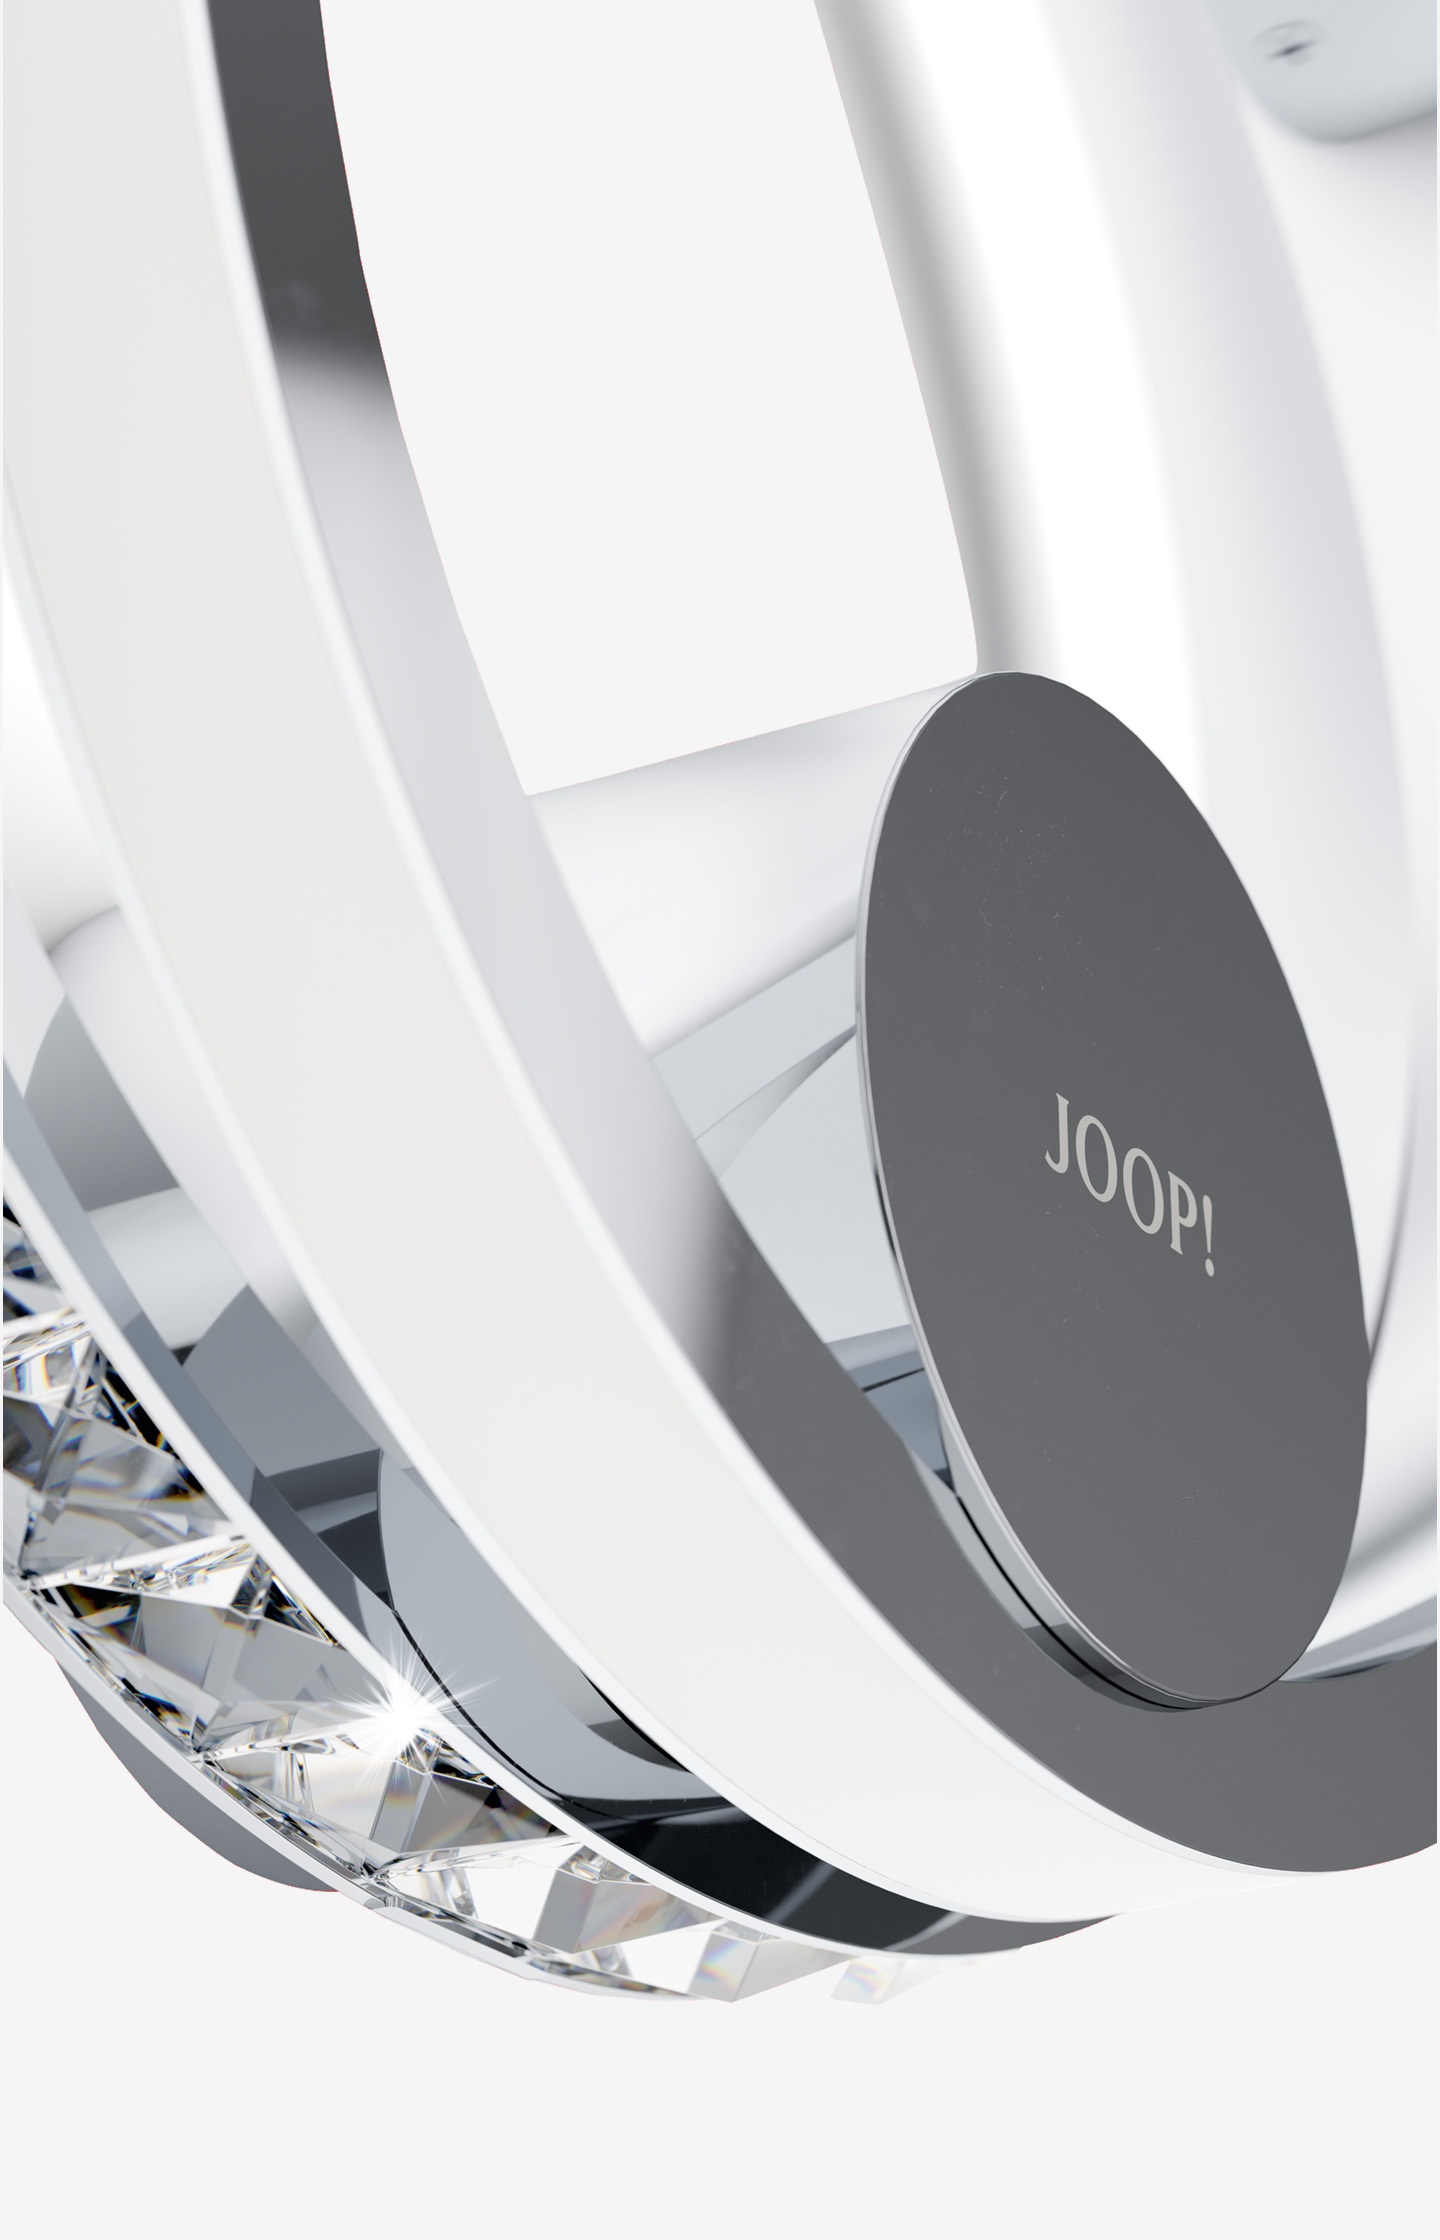 JOOP! JEWEL LIGHTS LED wall light, chrome - in the JOOP! Online Shop